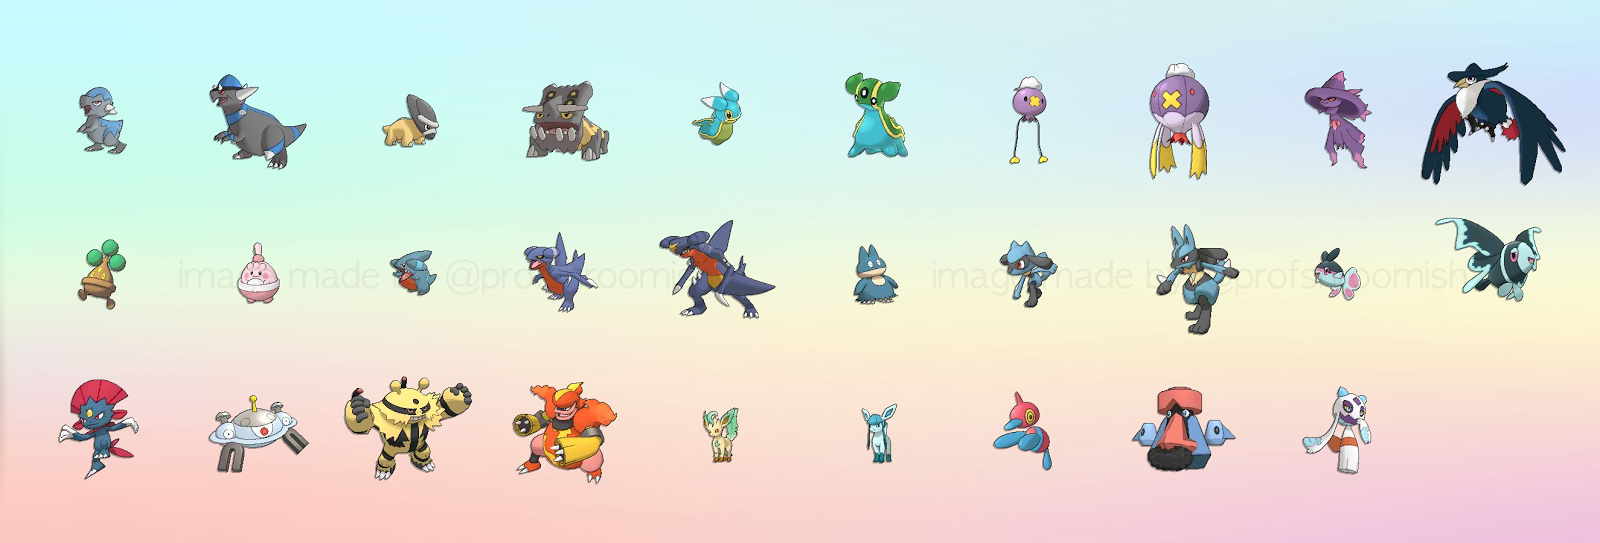 Pokémon Sun e Moon: entenda as evoluções Alola Form no game